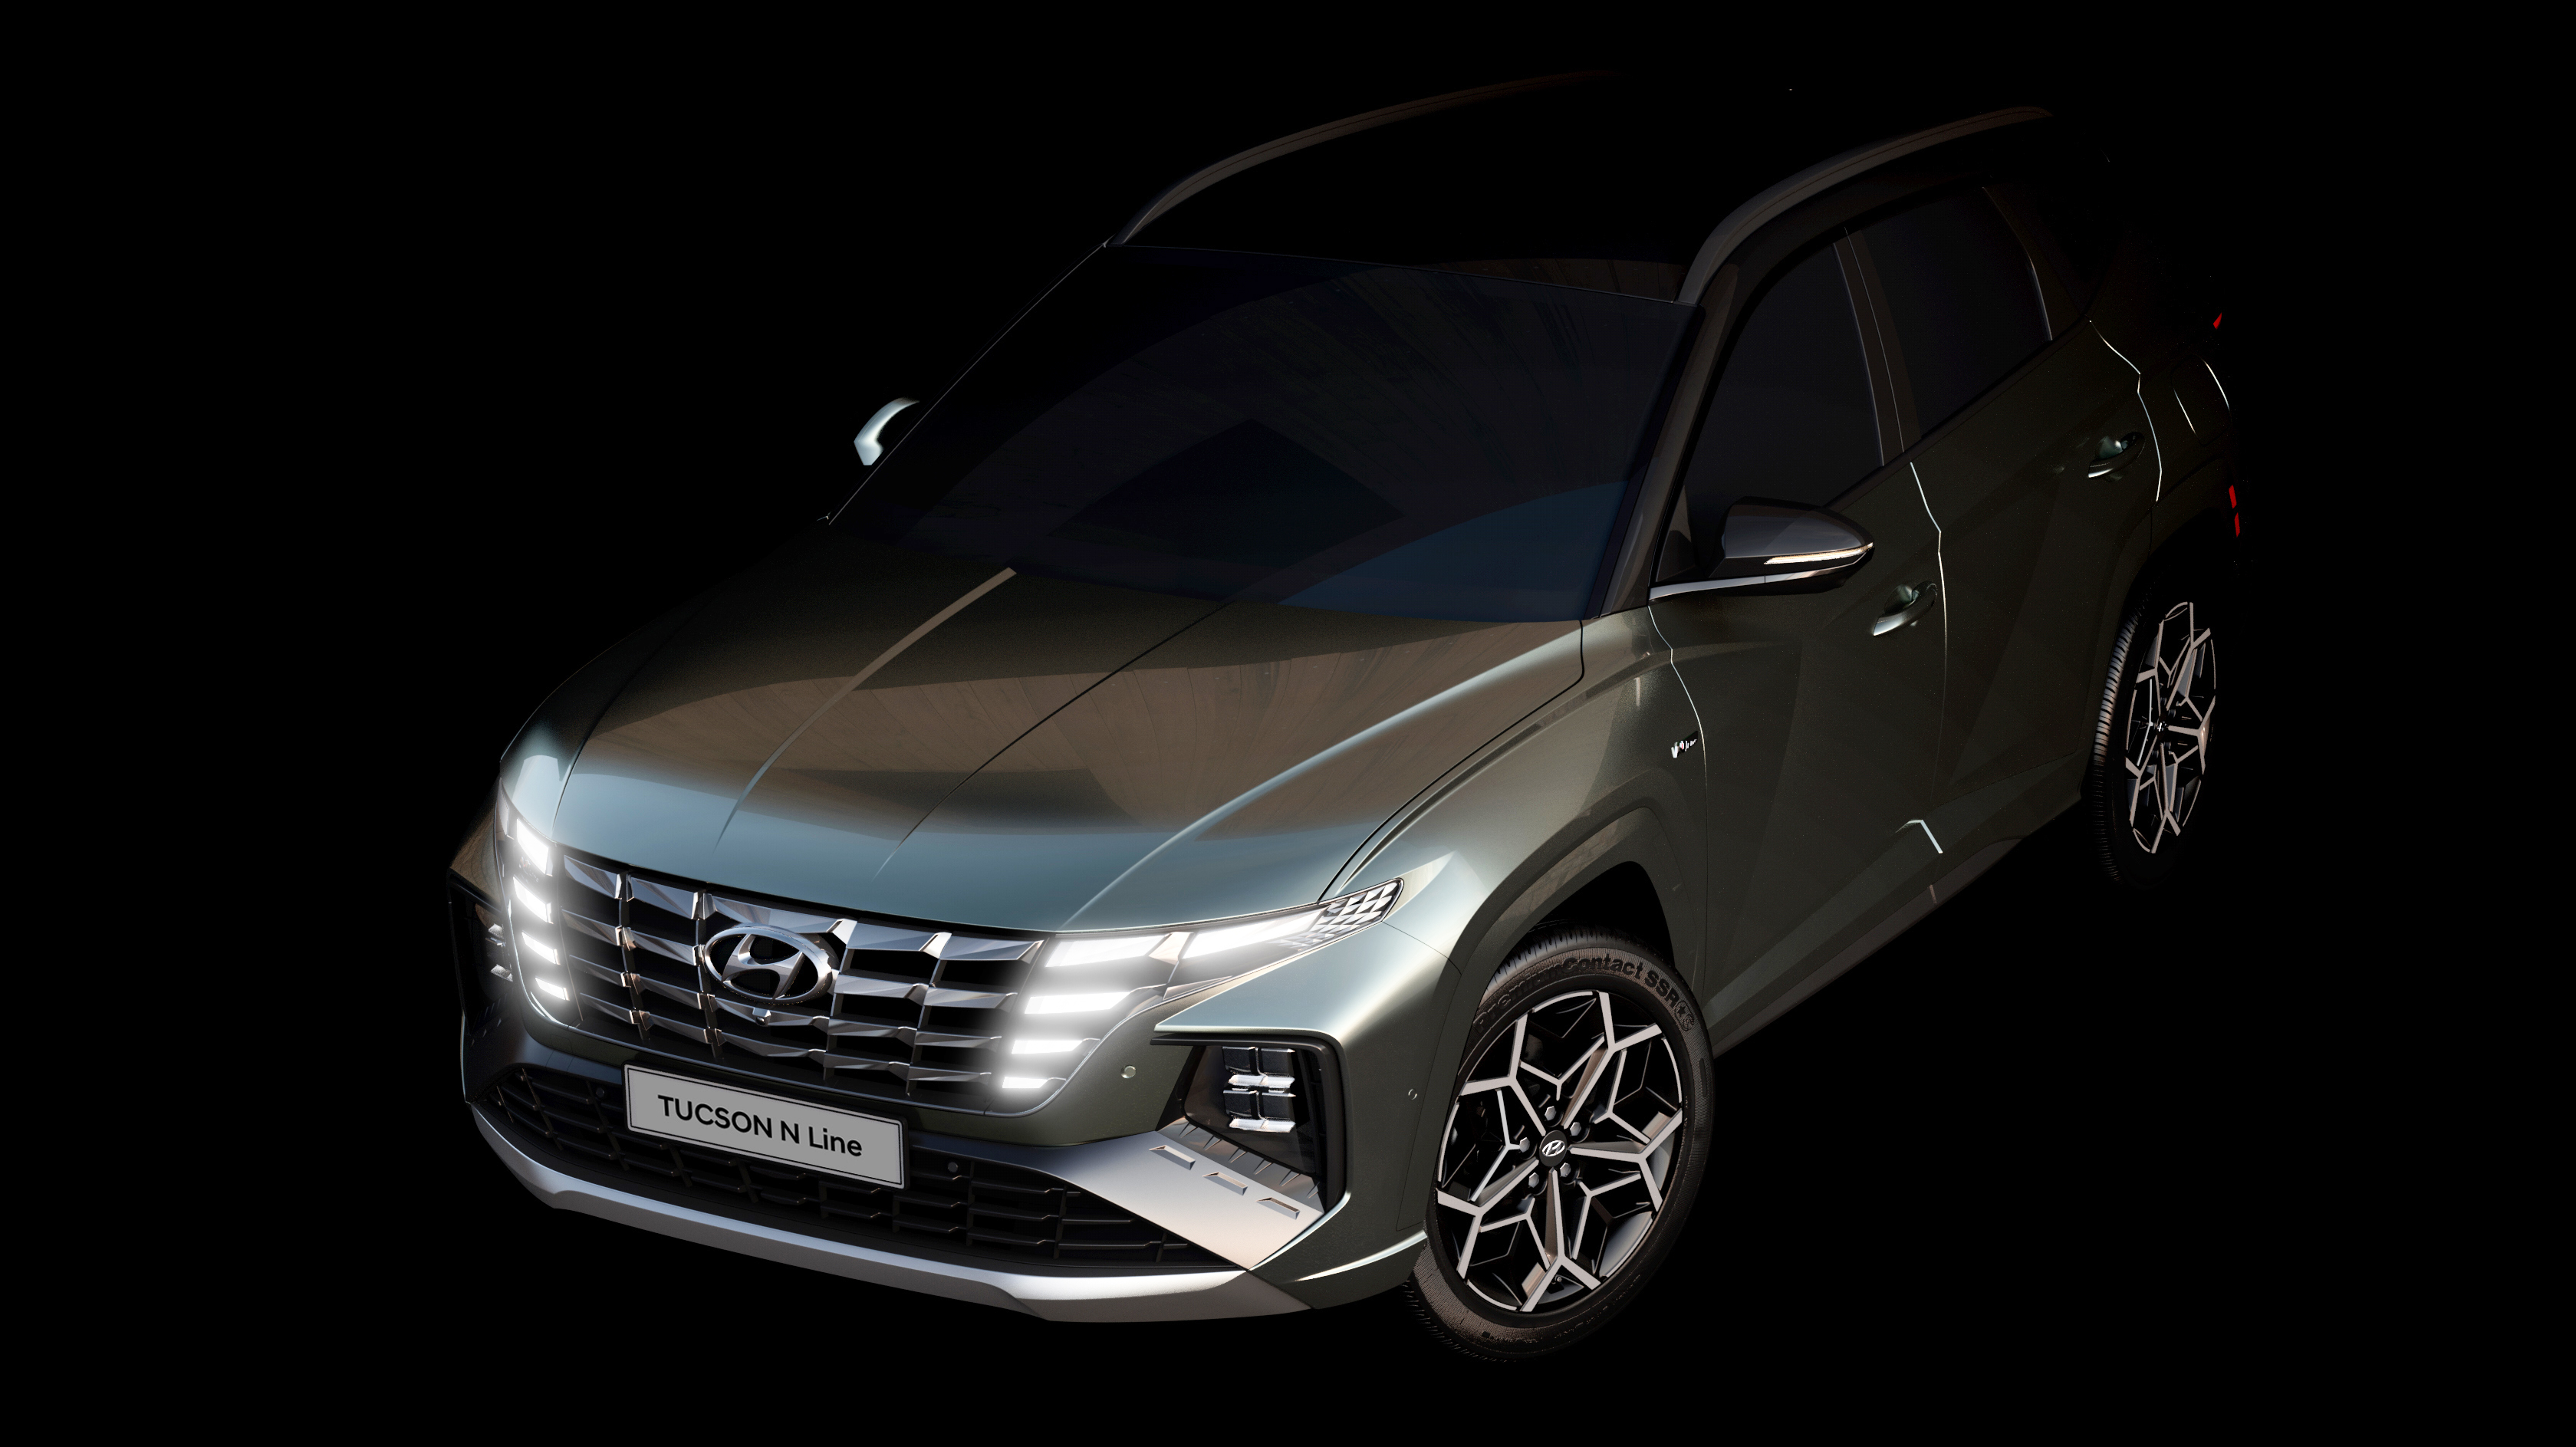 2021 Hyundai Tucson NLine previewed  Carbuyer